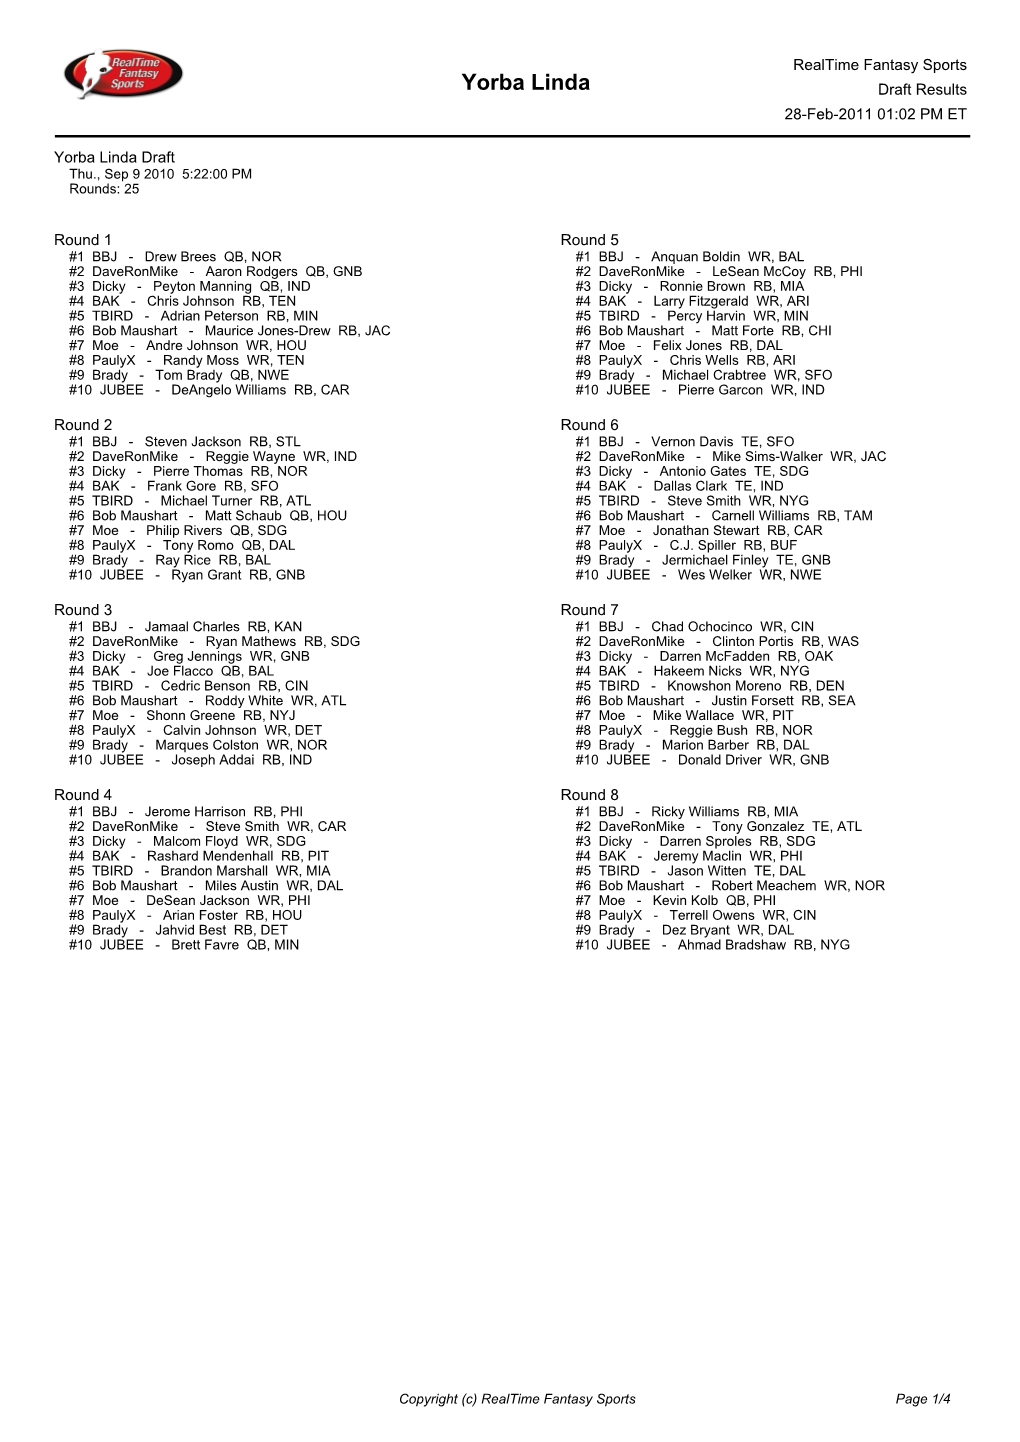 Yorba Linda Draft Results 28-Feb-2011 01:02 PM ET